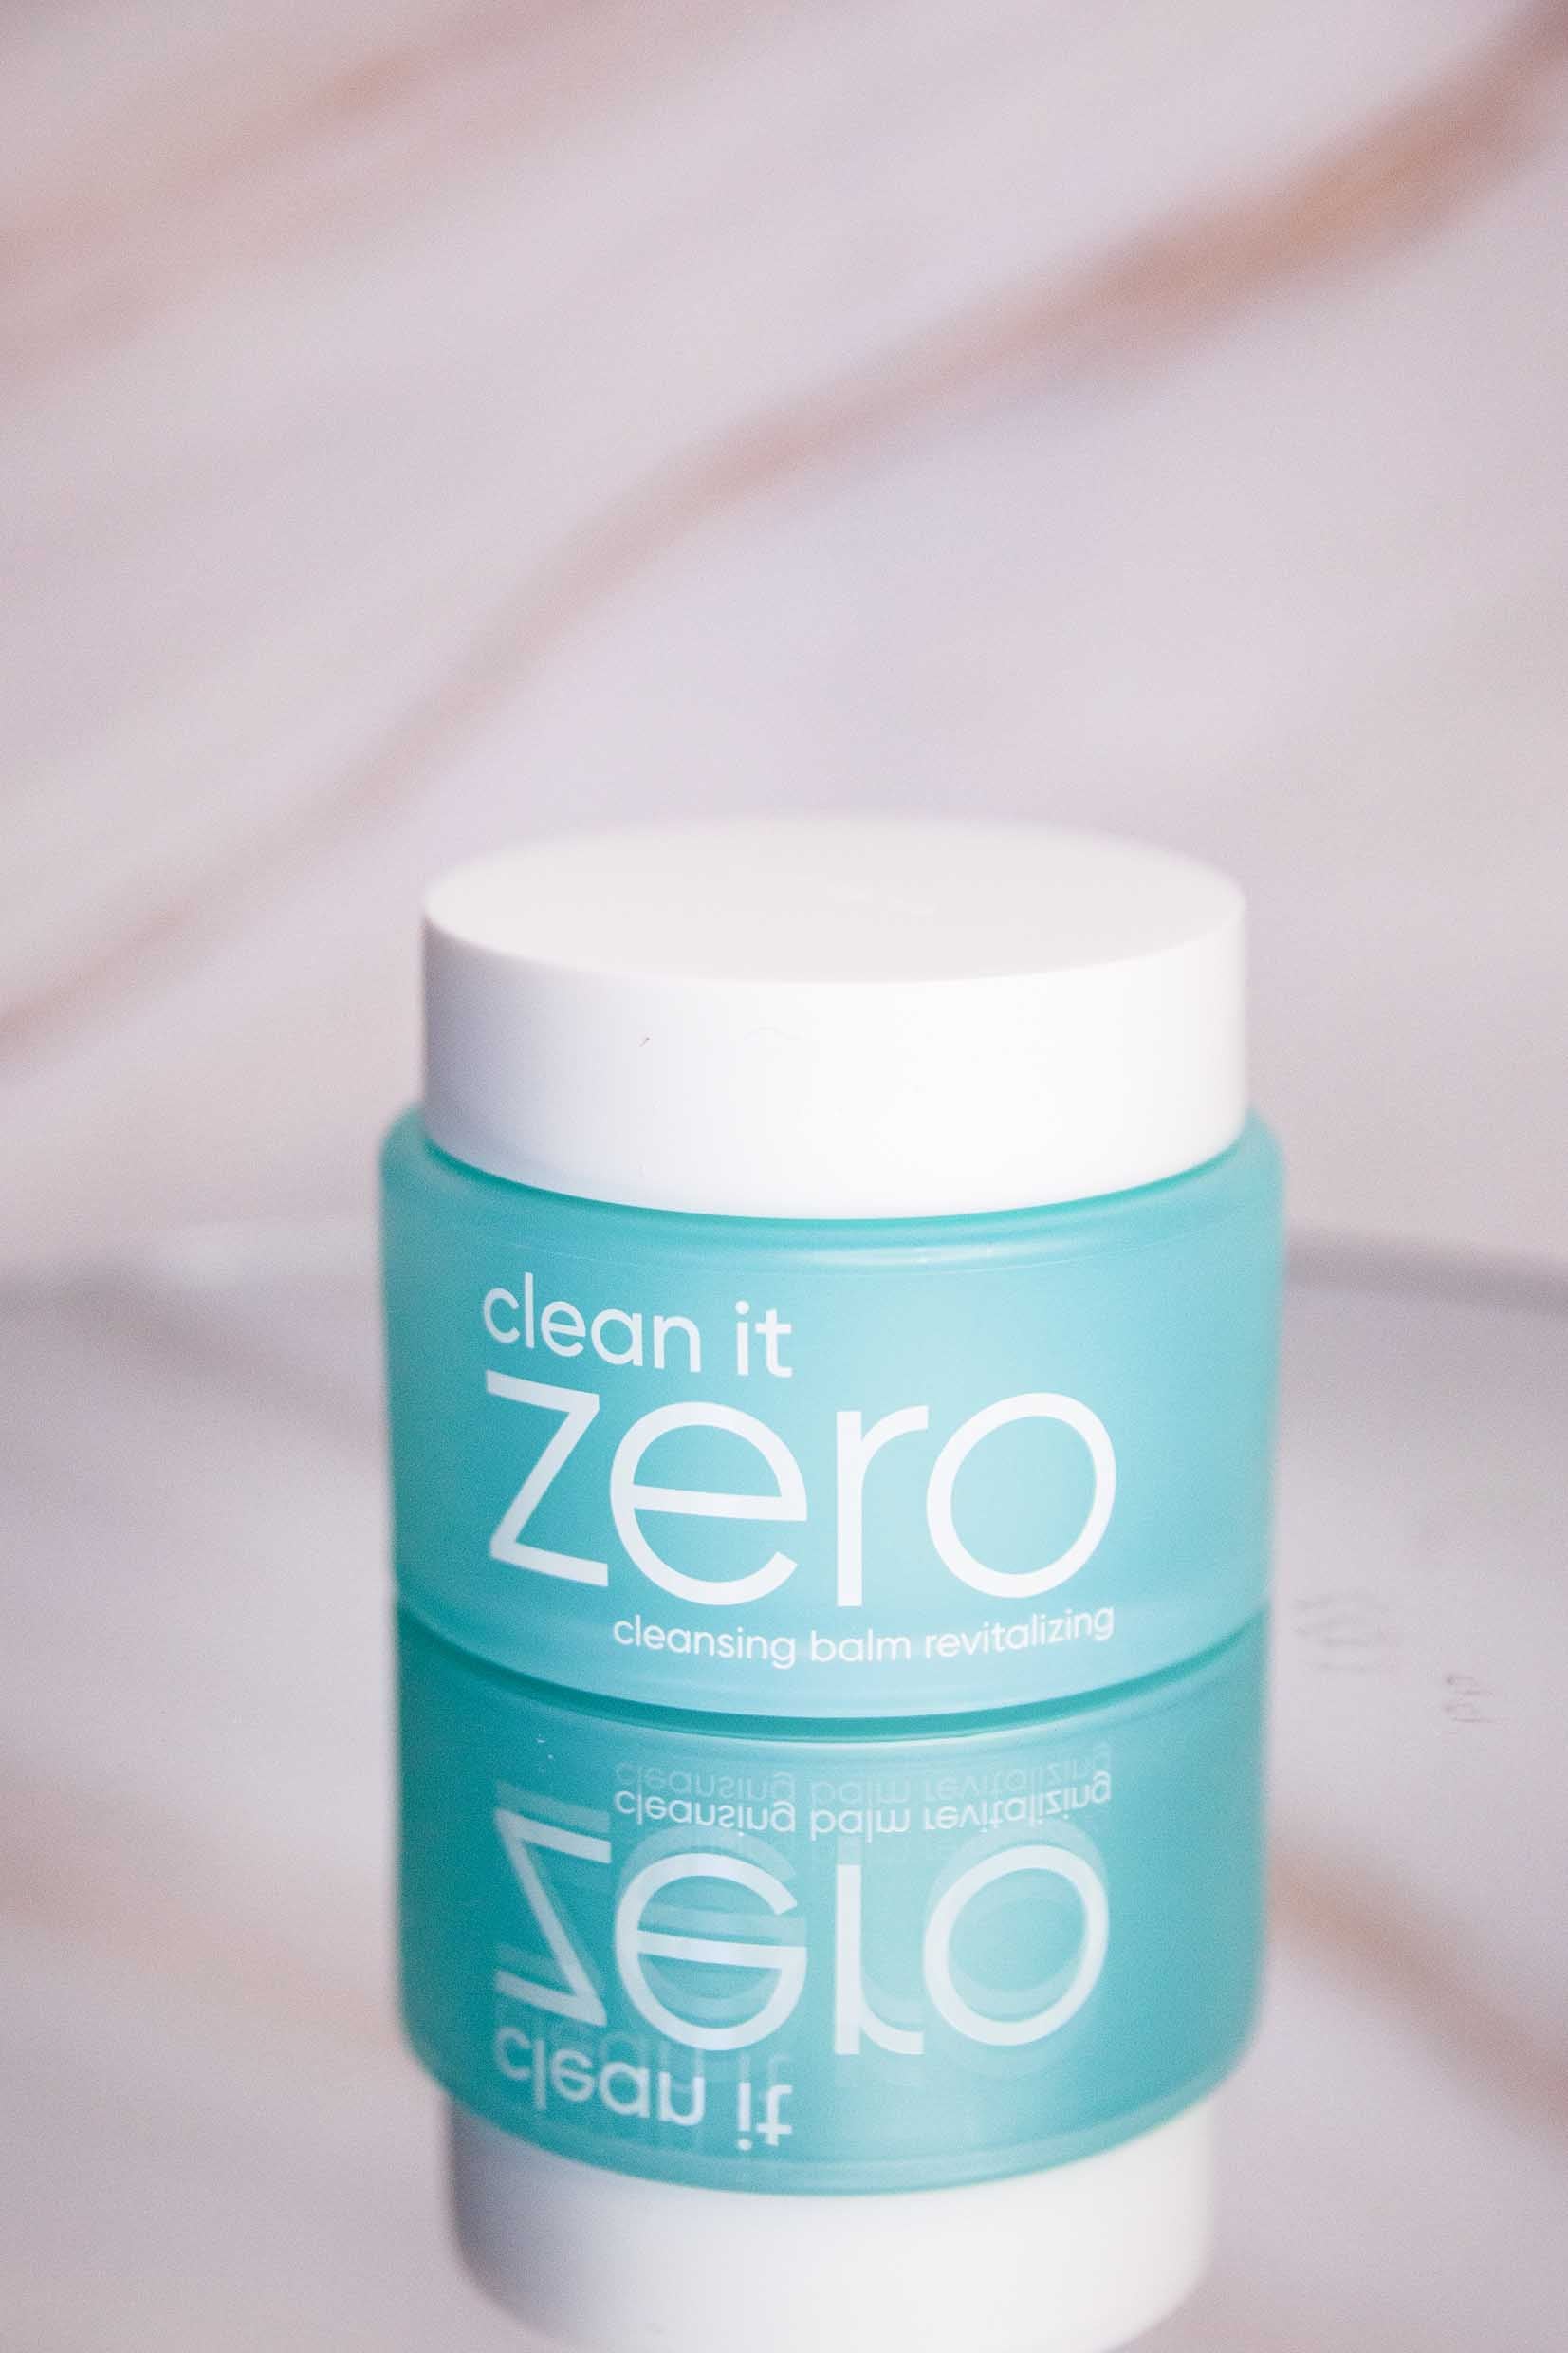 Banila Co. Clean It Zero Cleansing Balm Revitalizing